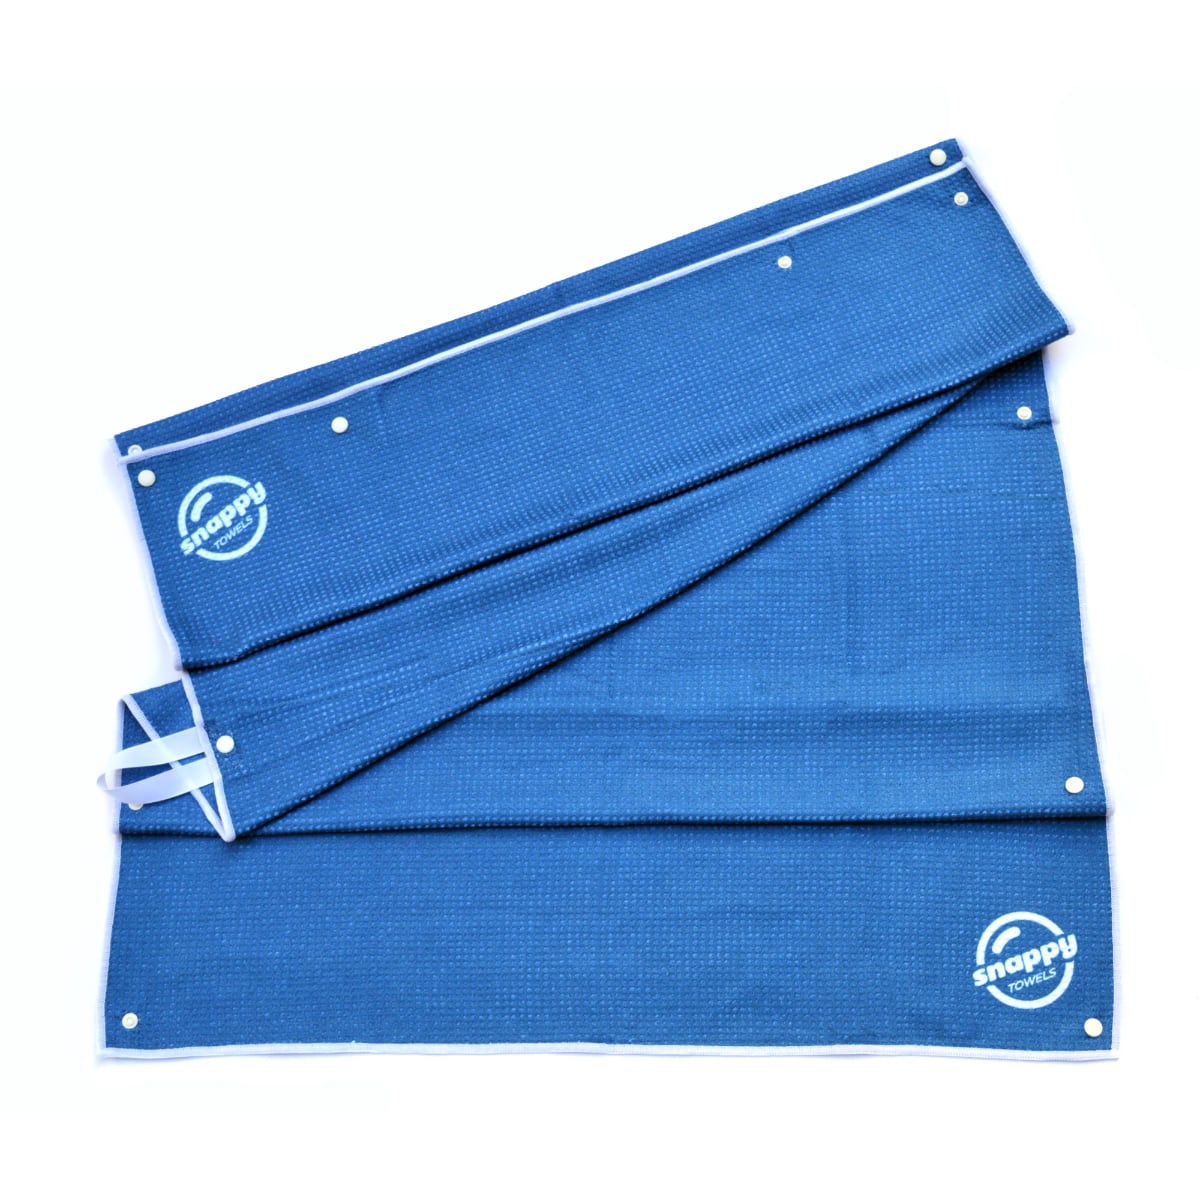 Snappy Swim/Sport Towel - Scuba Blue